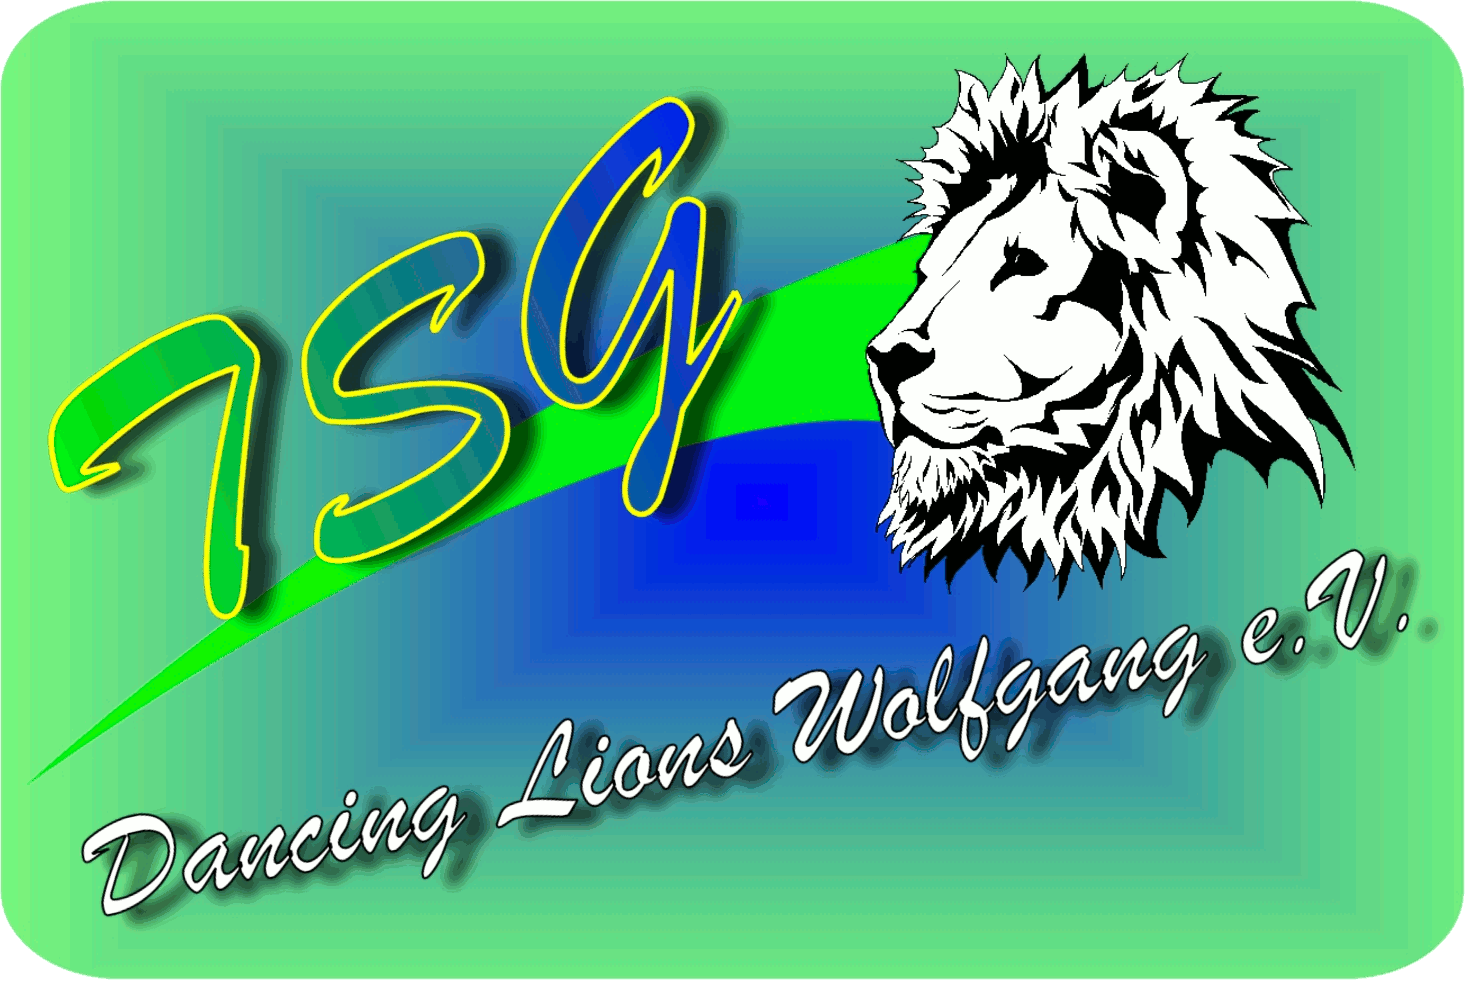 TSG Dancing Lions Wolfgang e.V.